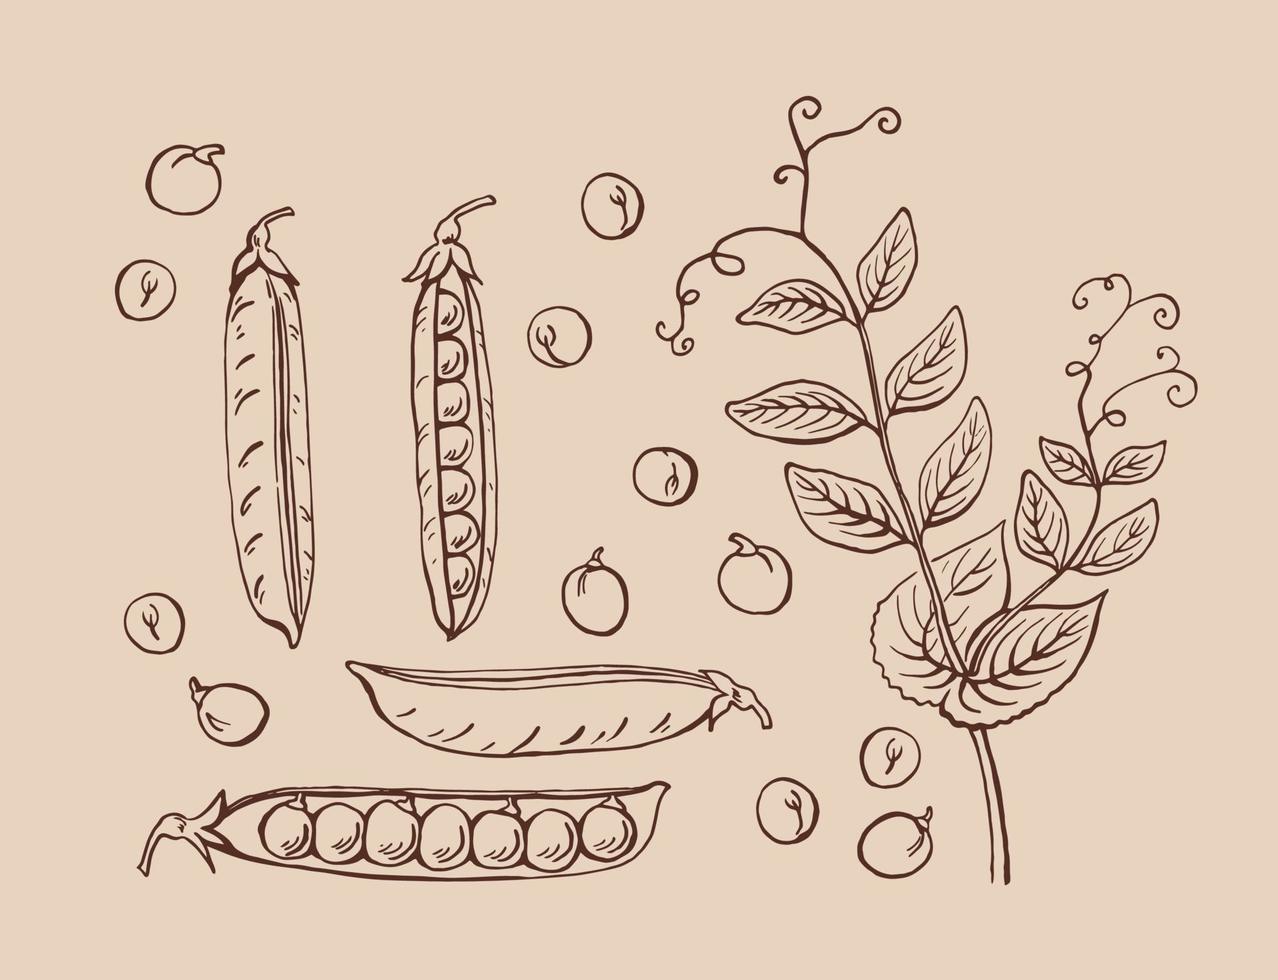 boceto de vainas de guisantes. establecer. ilustración dibujada a mano convertida en vector. ilustración de alimentos orgánicos aislada. vector